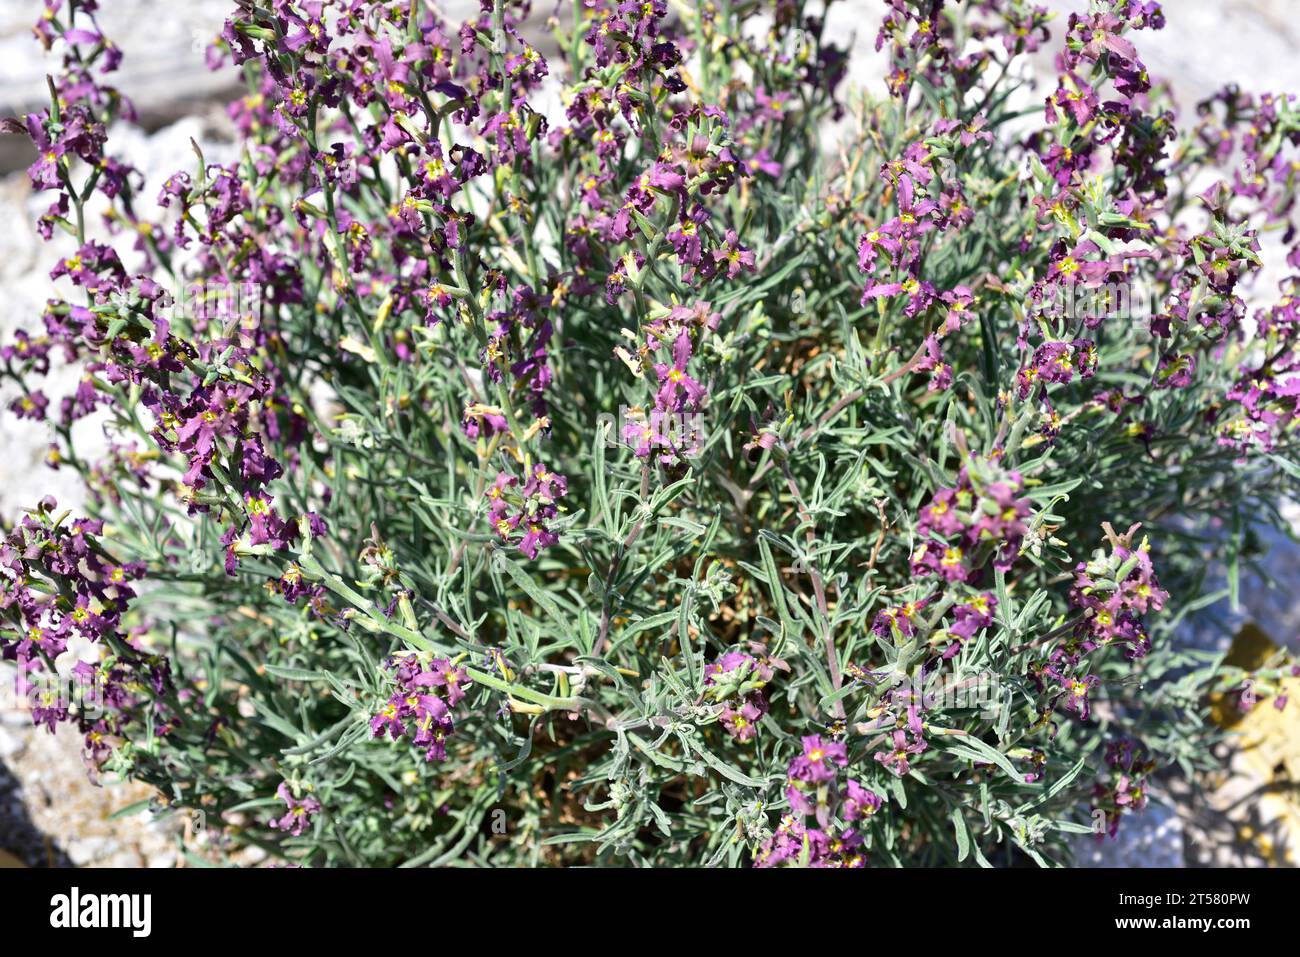 Alheli de campo (Matthiola fruticulosa) is a perennial herb native to Mediterranean Basin. Flowers detail. Stock Photo